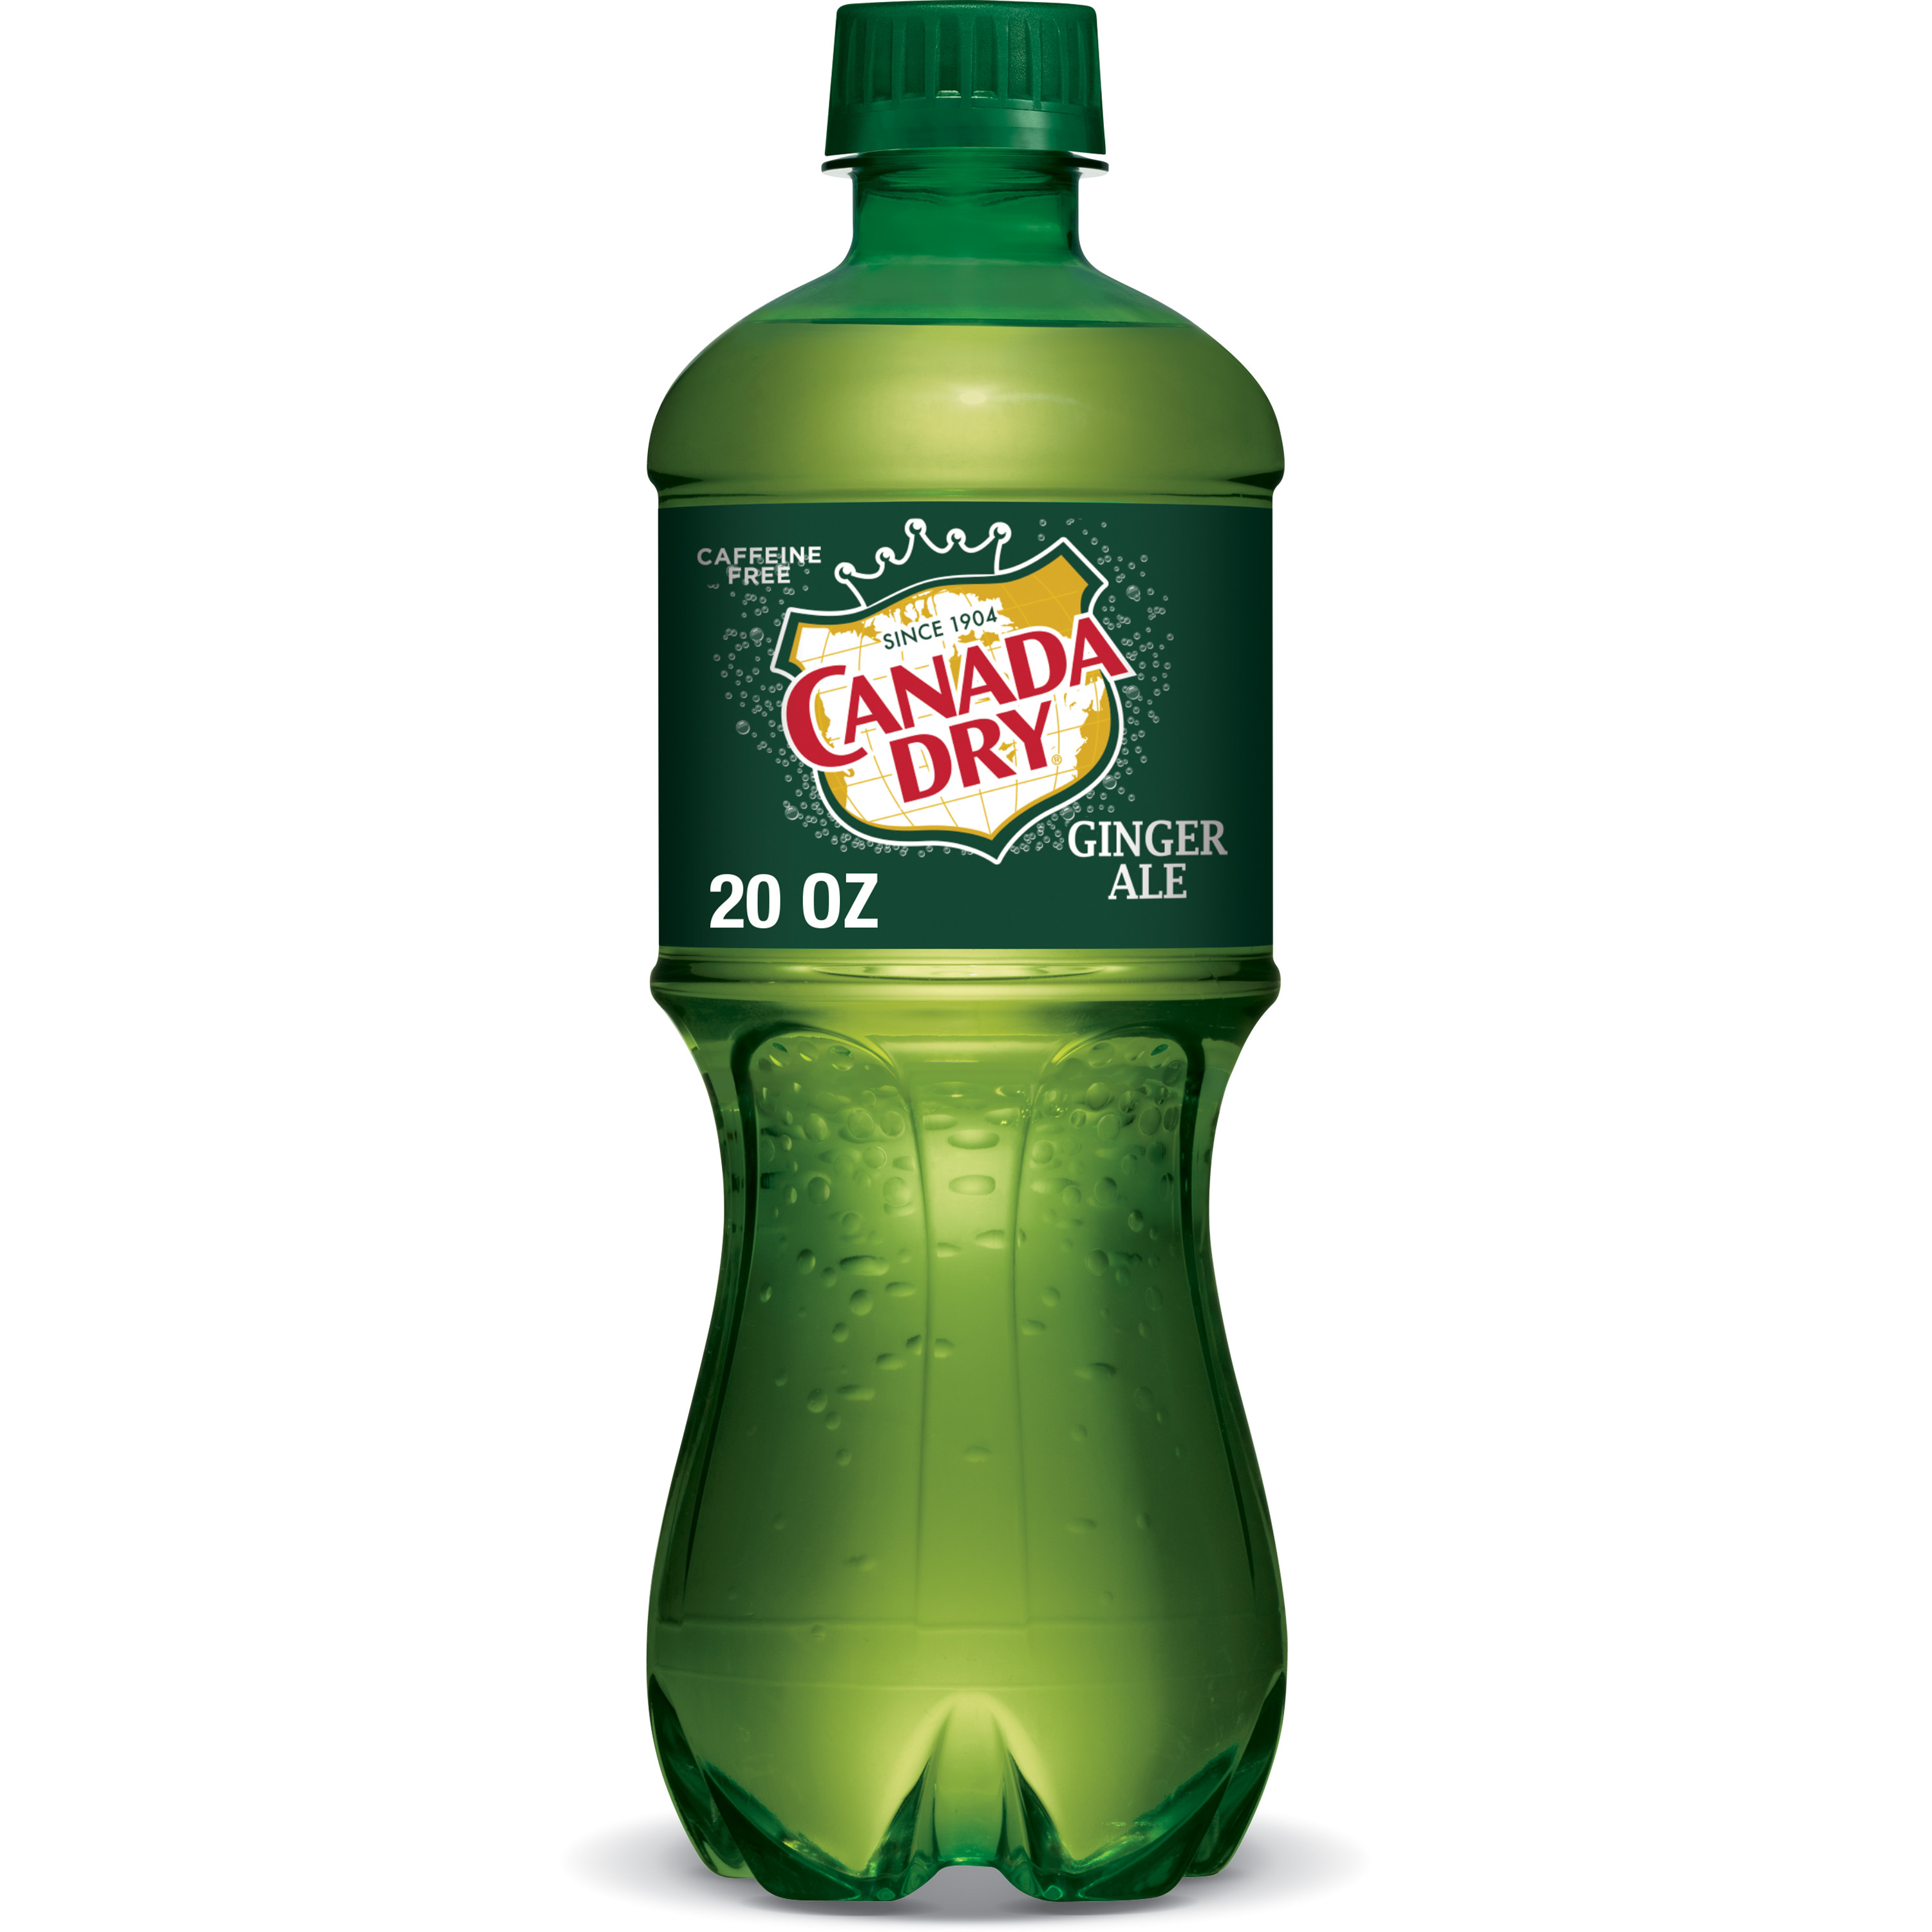 Canada Dry Caffeine Free Ginger Ale Soda Pop, 20 fl oz, Bottle - image 1 of 11